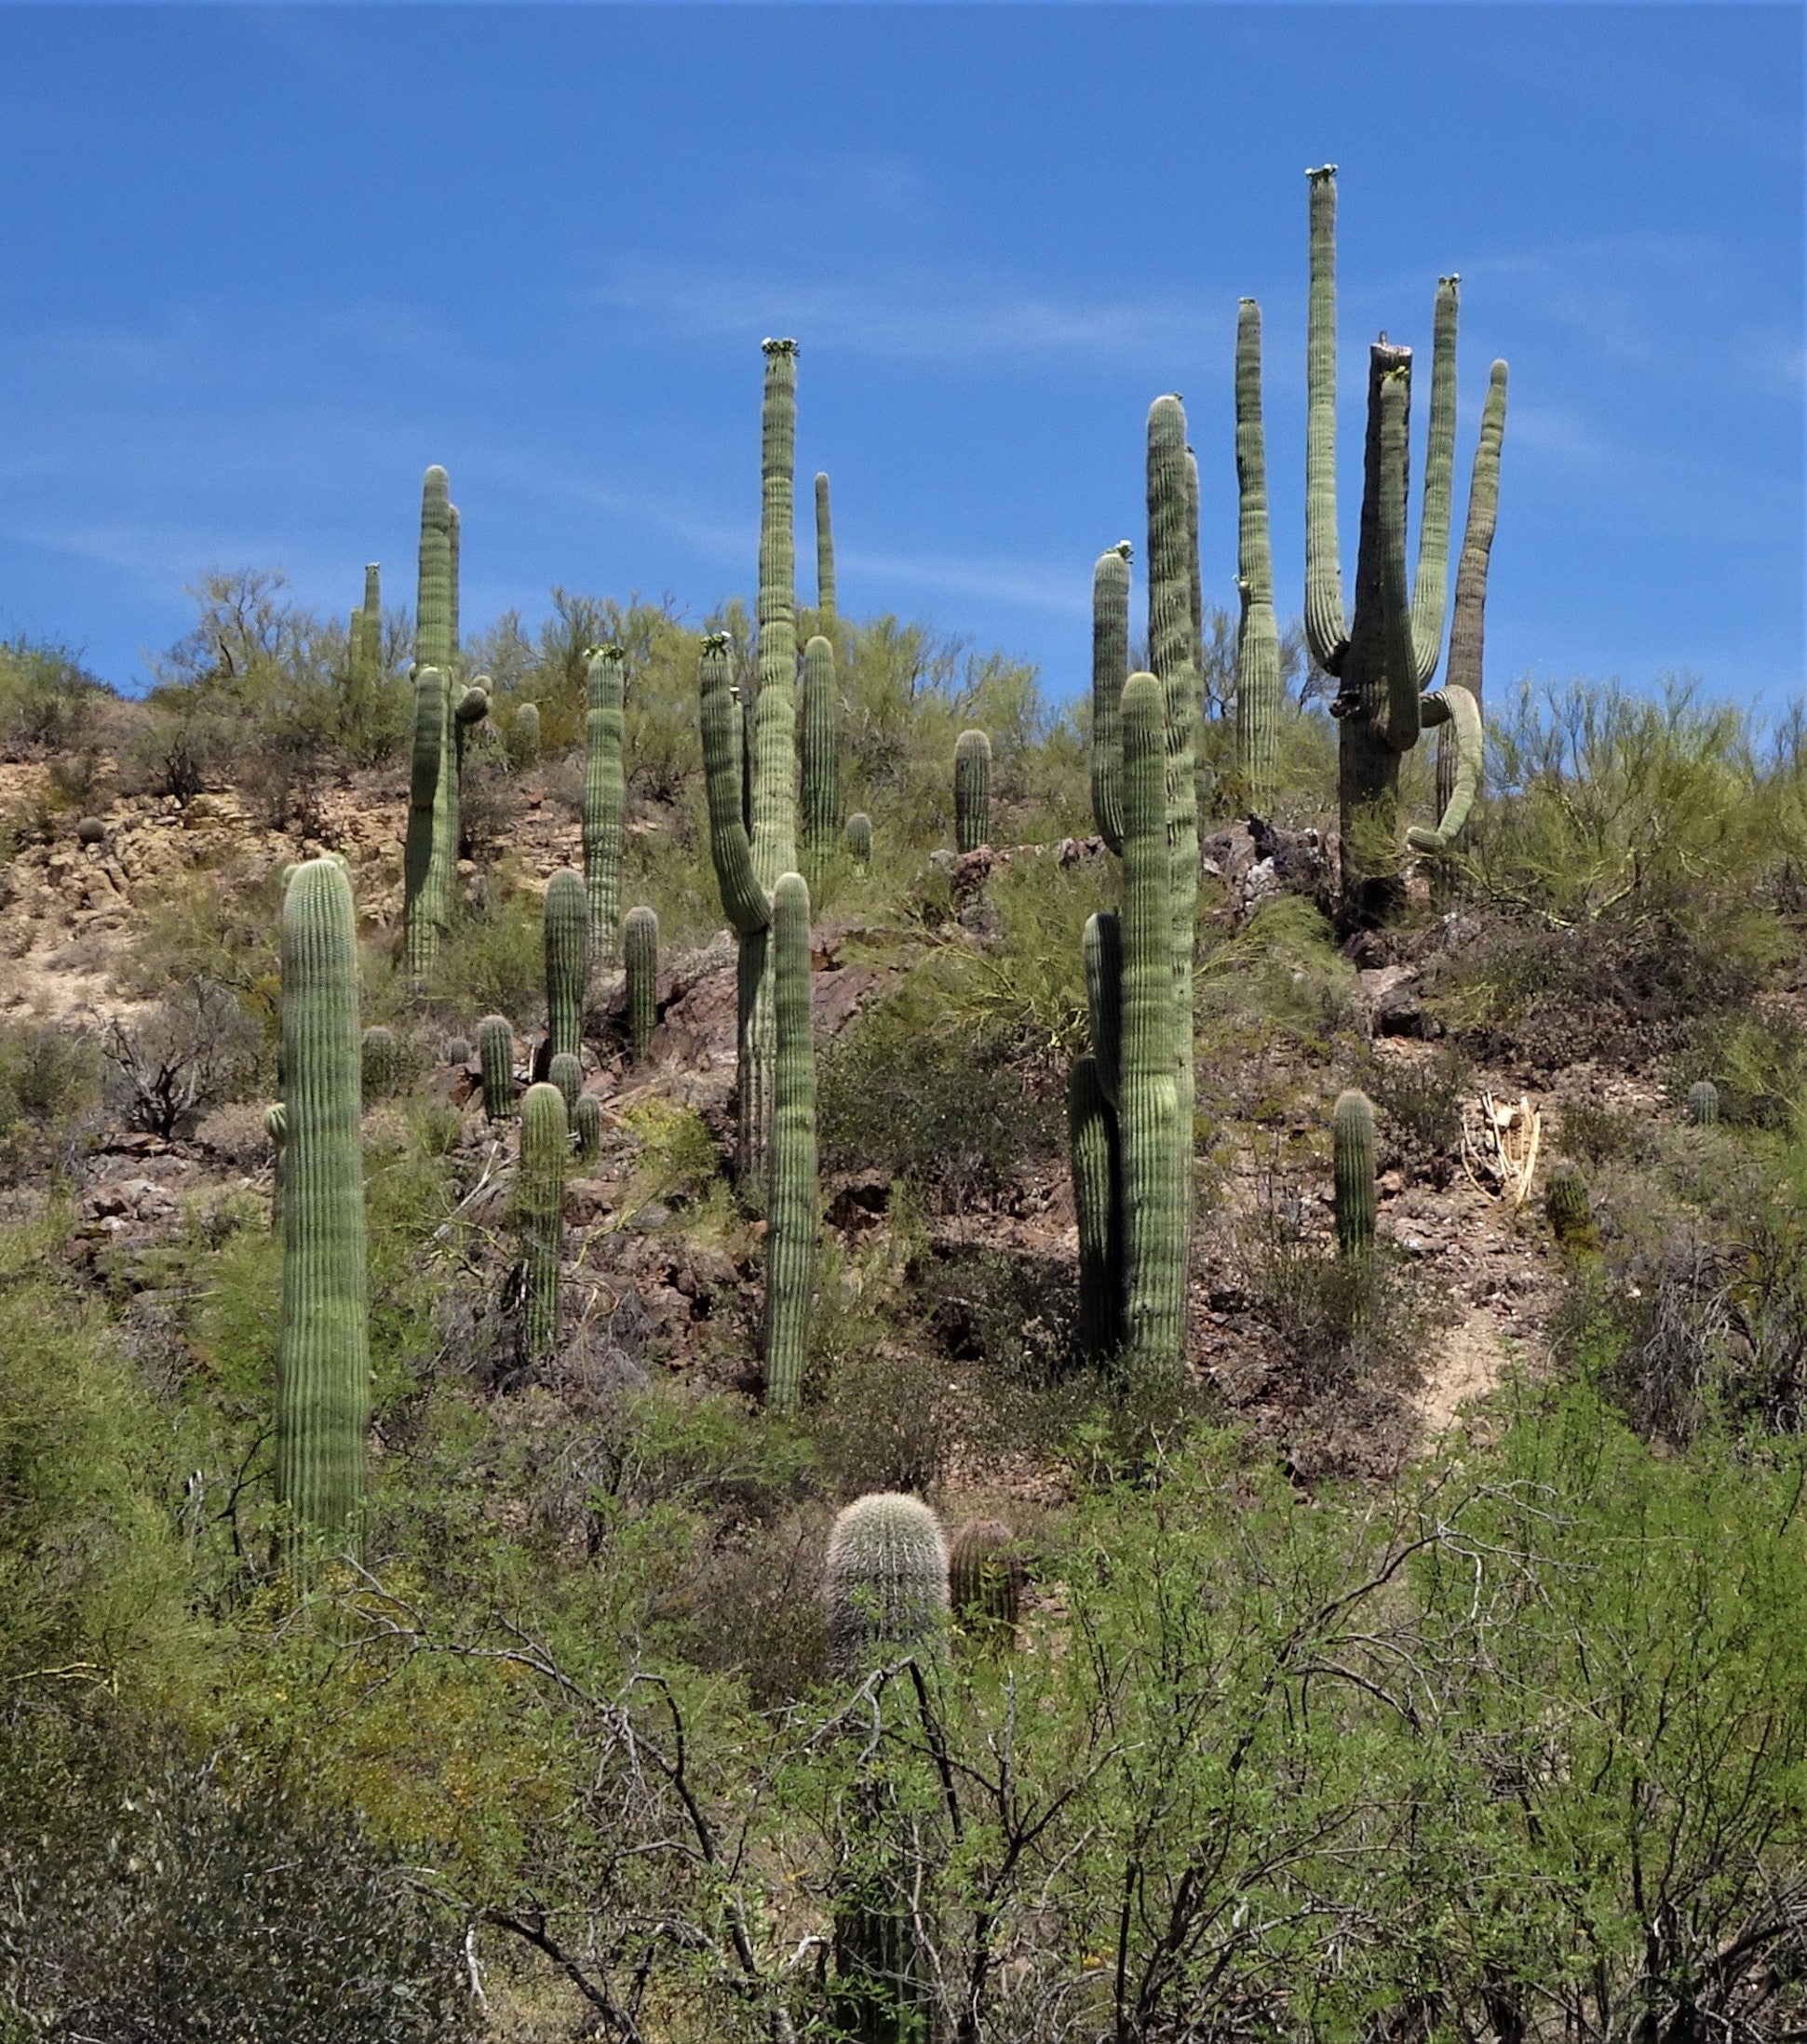 Several saguaro cacti together in a desert field 